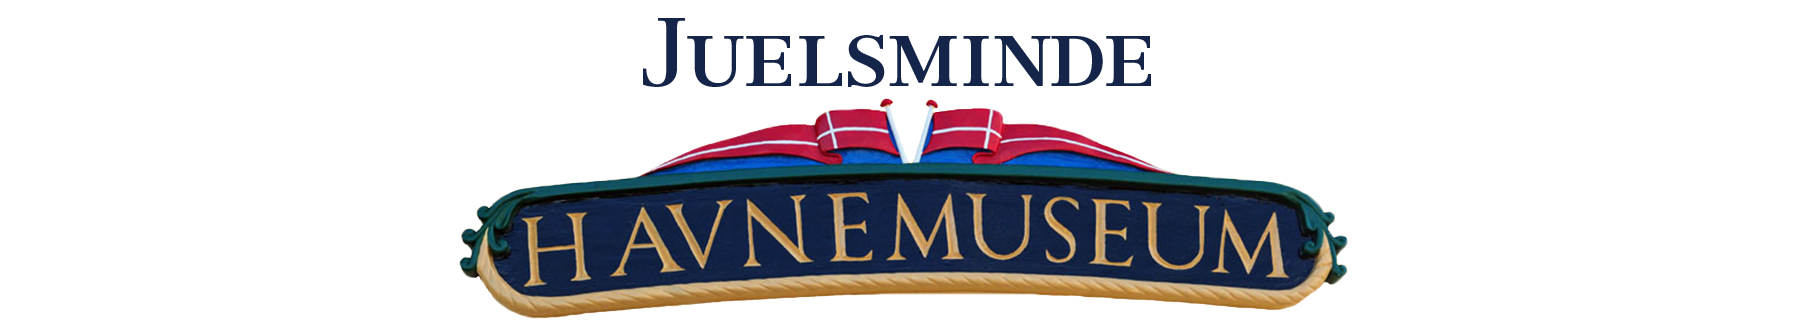 Juelsminde Havnemuseum